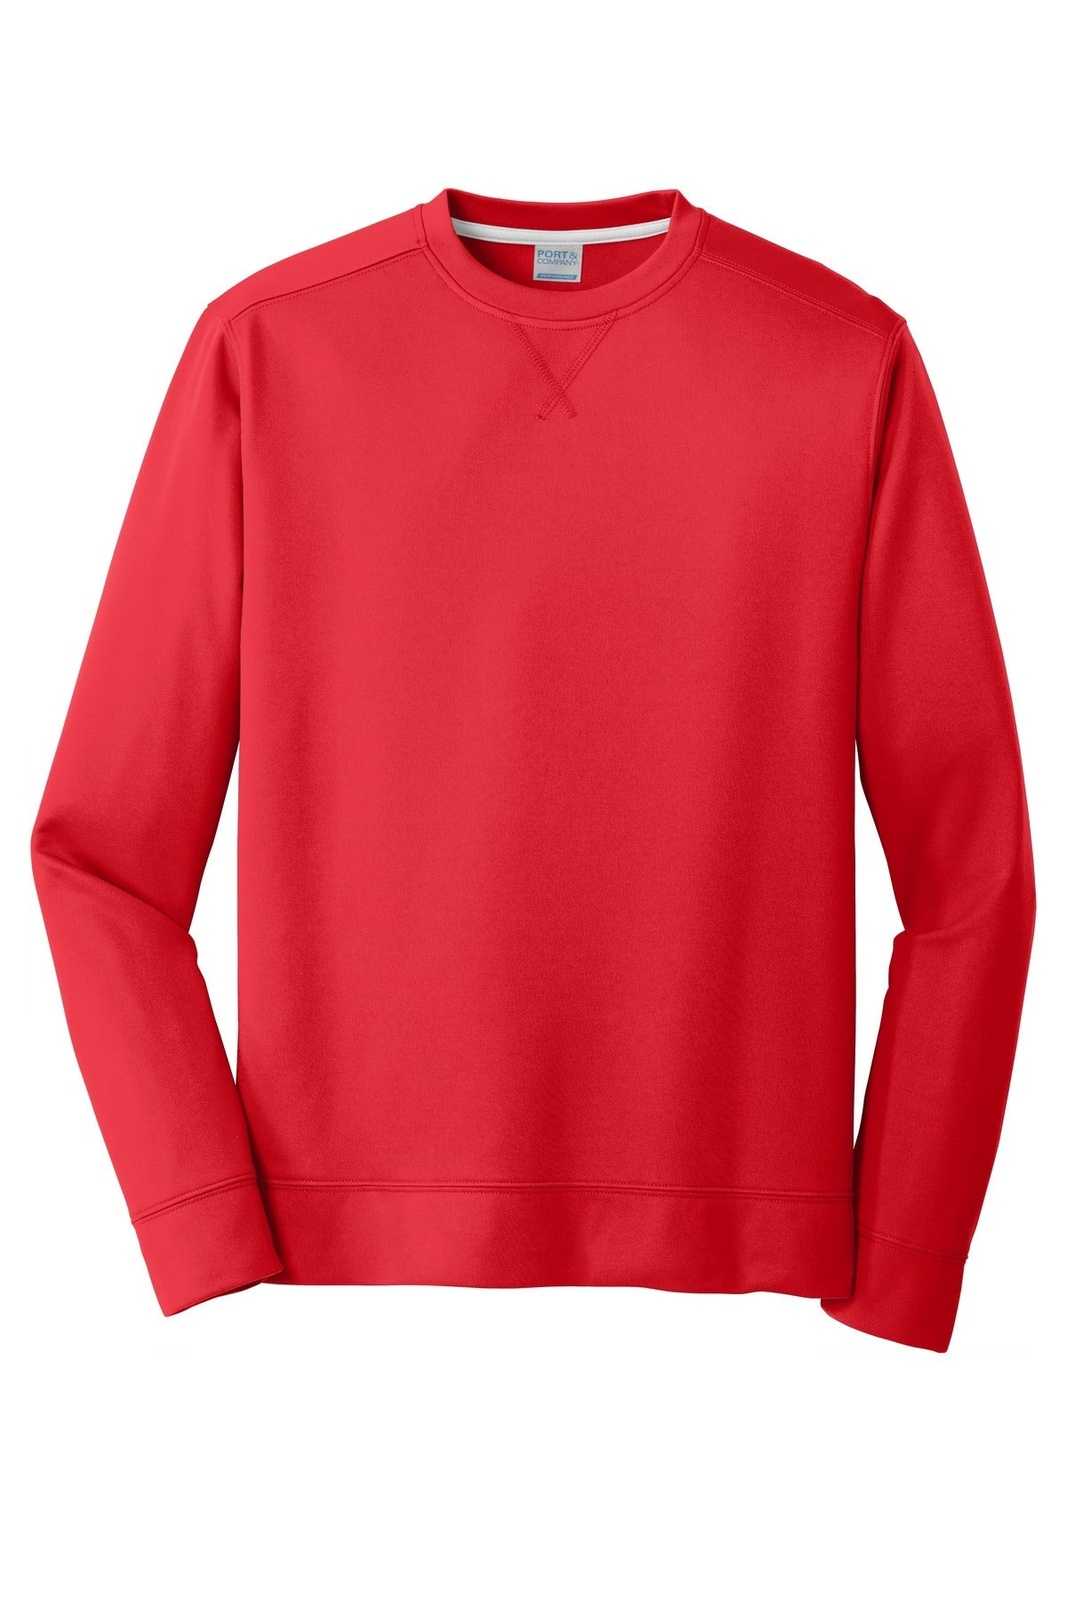 Port &amp; Company PC590 Fleece Crewneck Sweatshirt - Red - HIT a Double - 5